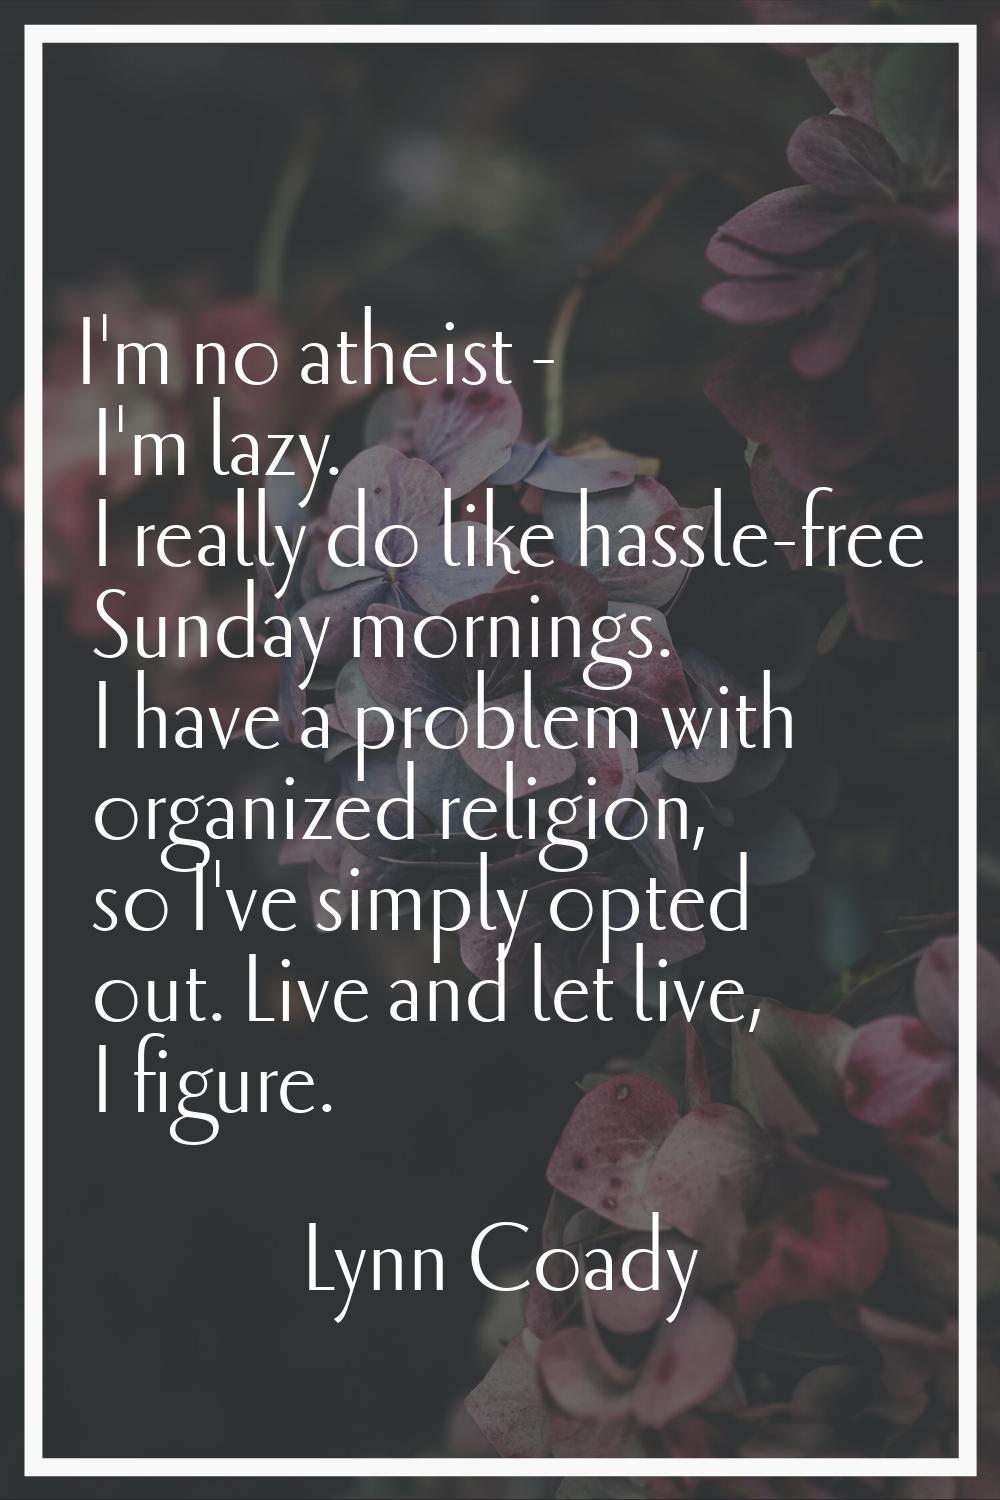 I'm no atheist - I'm lazy. I really do like hassle-free Sunday mornings. I have a problem with orga